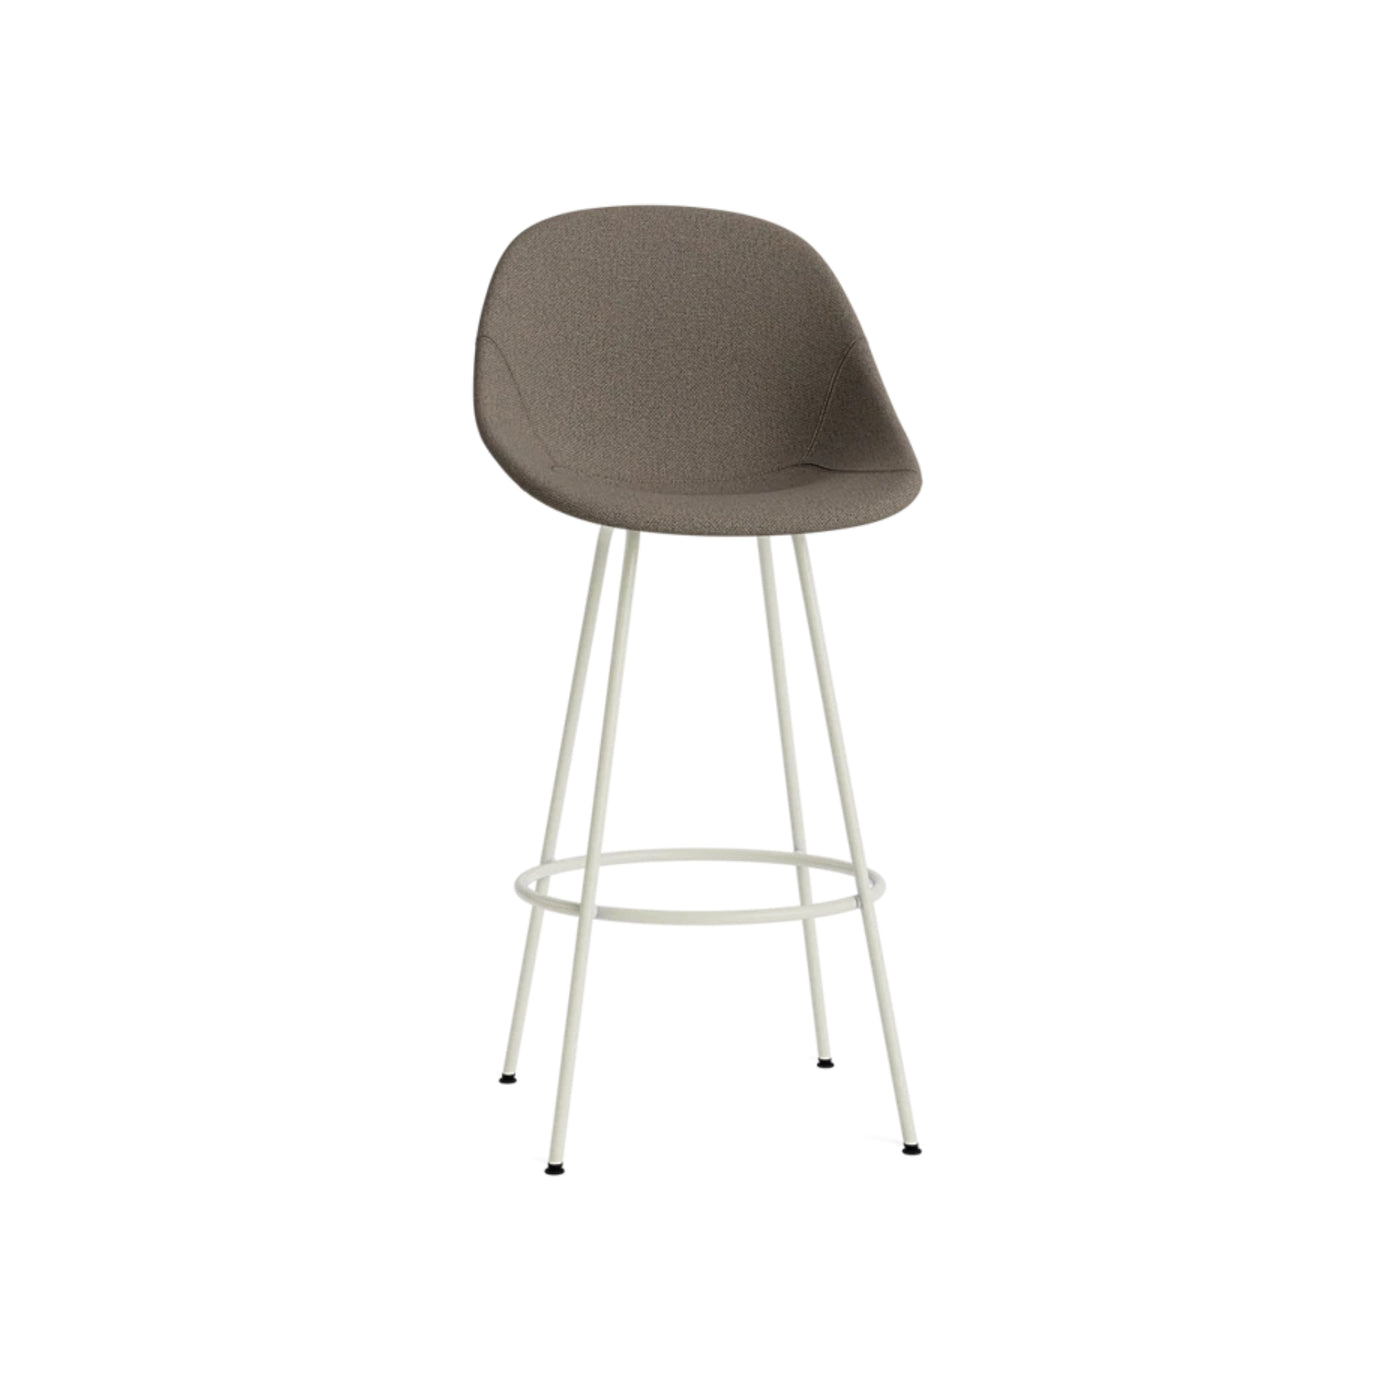 Normann Copenhagen Mat Bar Chair. Shop now at someday designs. #colour_hallingdal-227